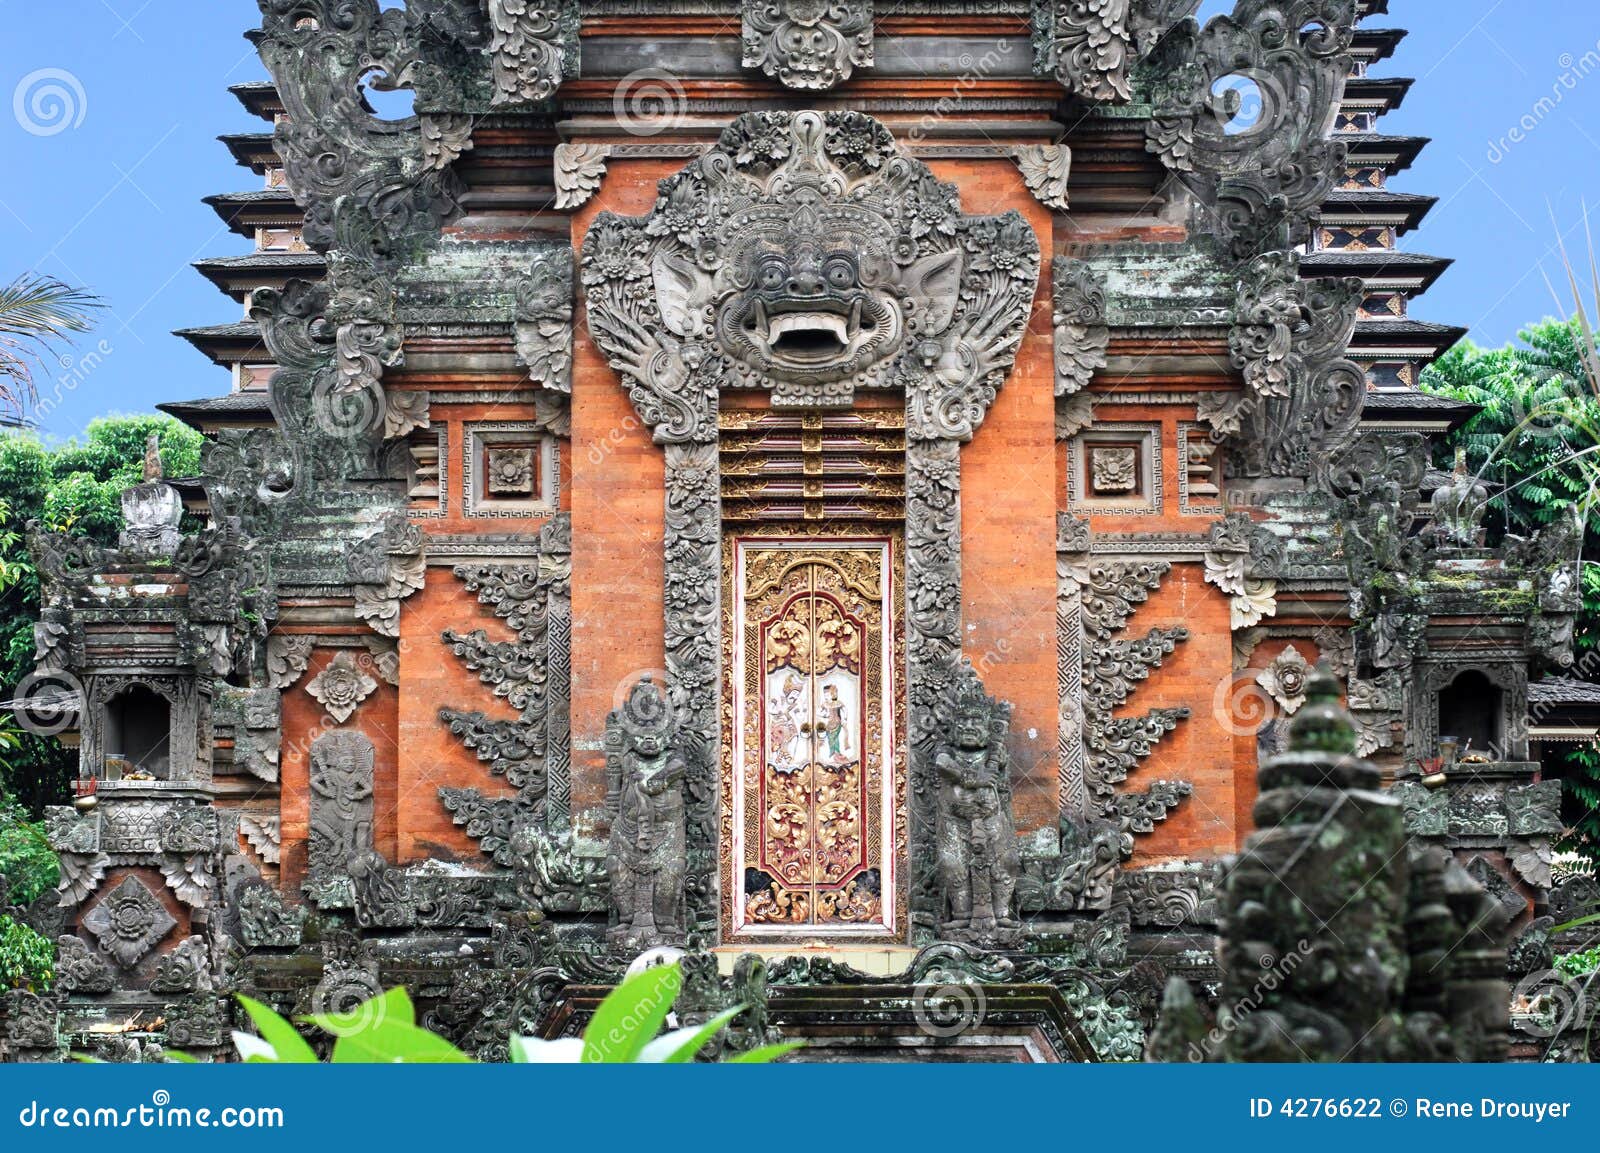 indonesia, bali: temple